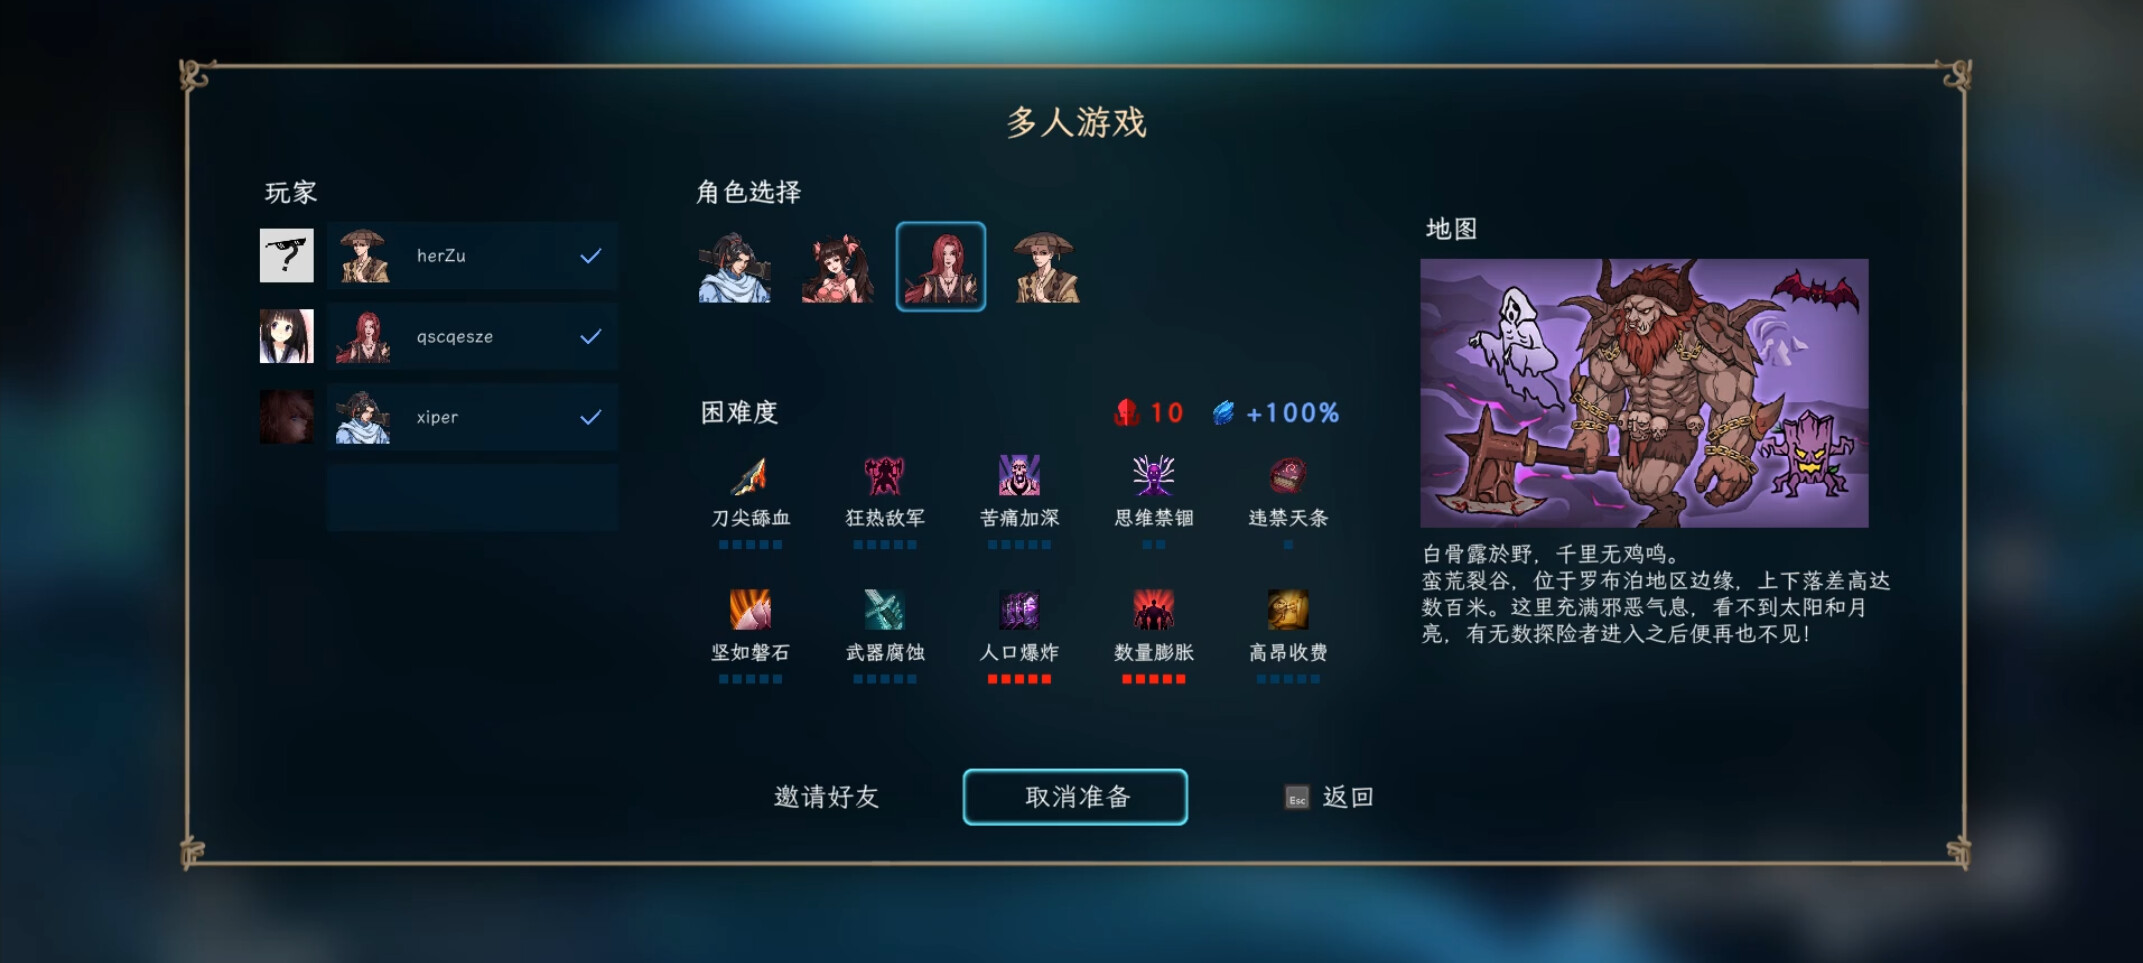 Jianghu Survivor Free Download for PC